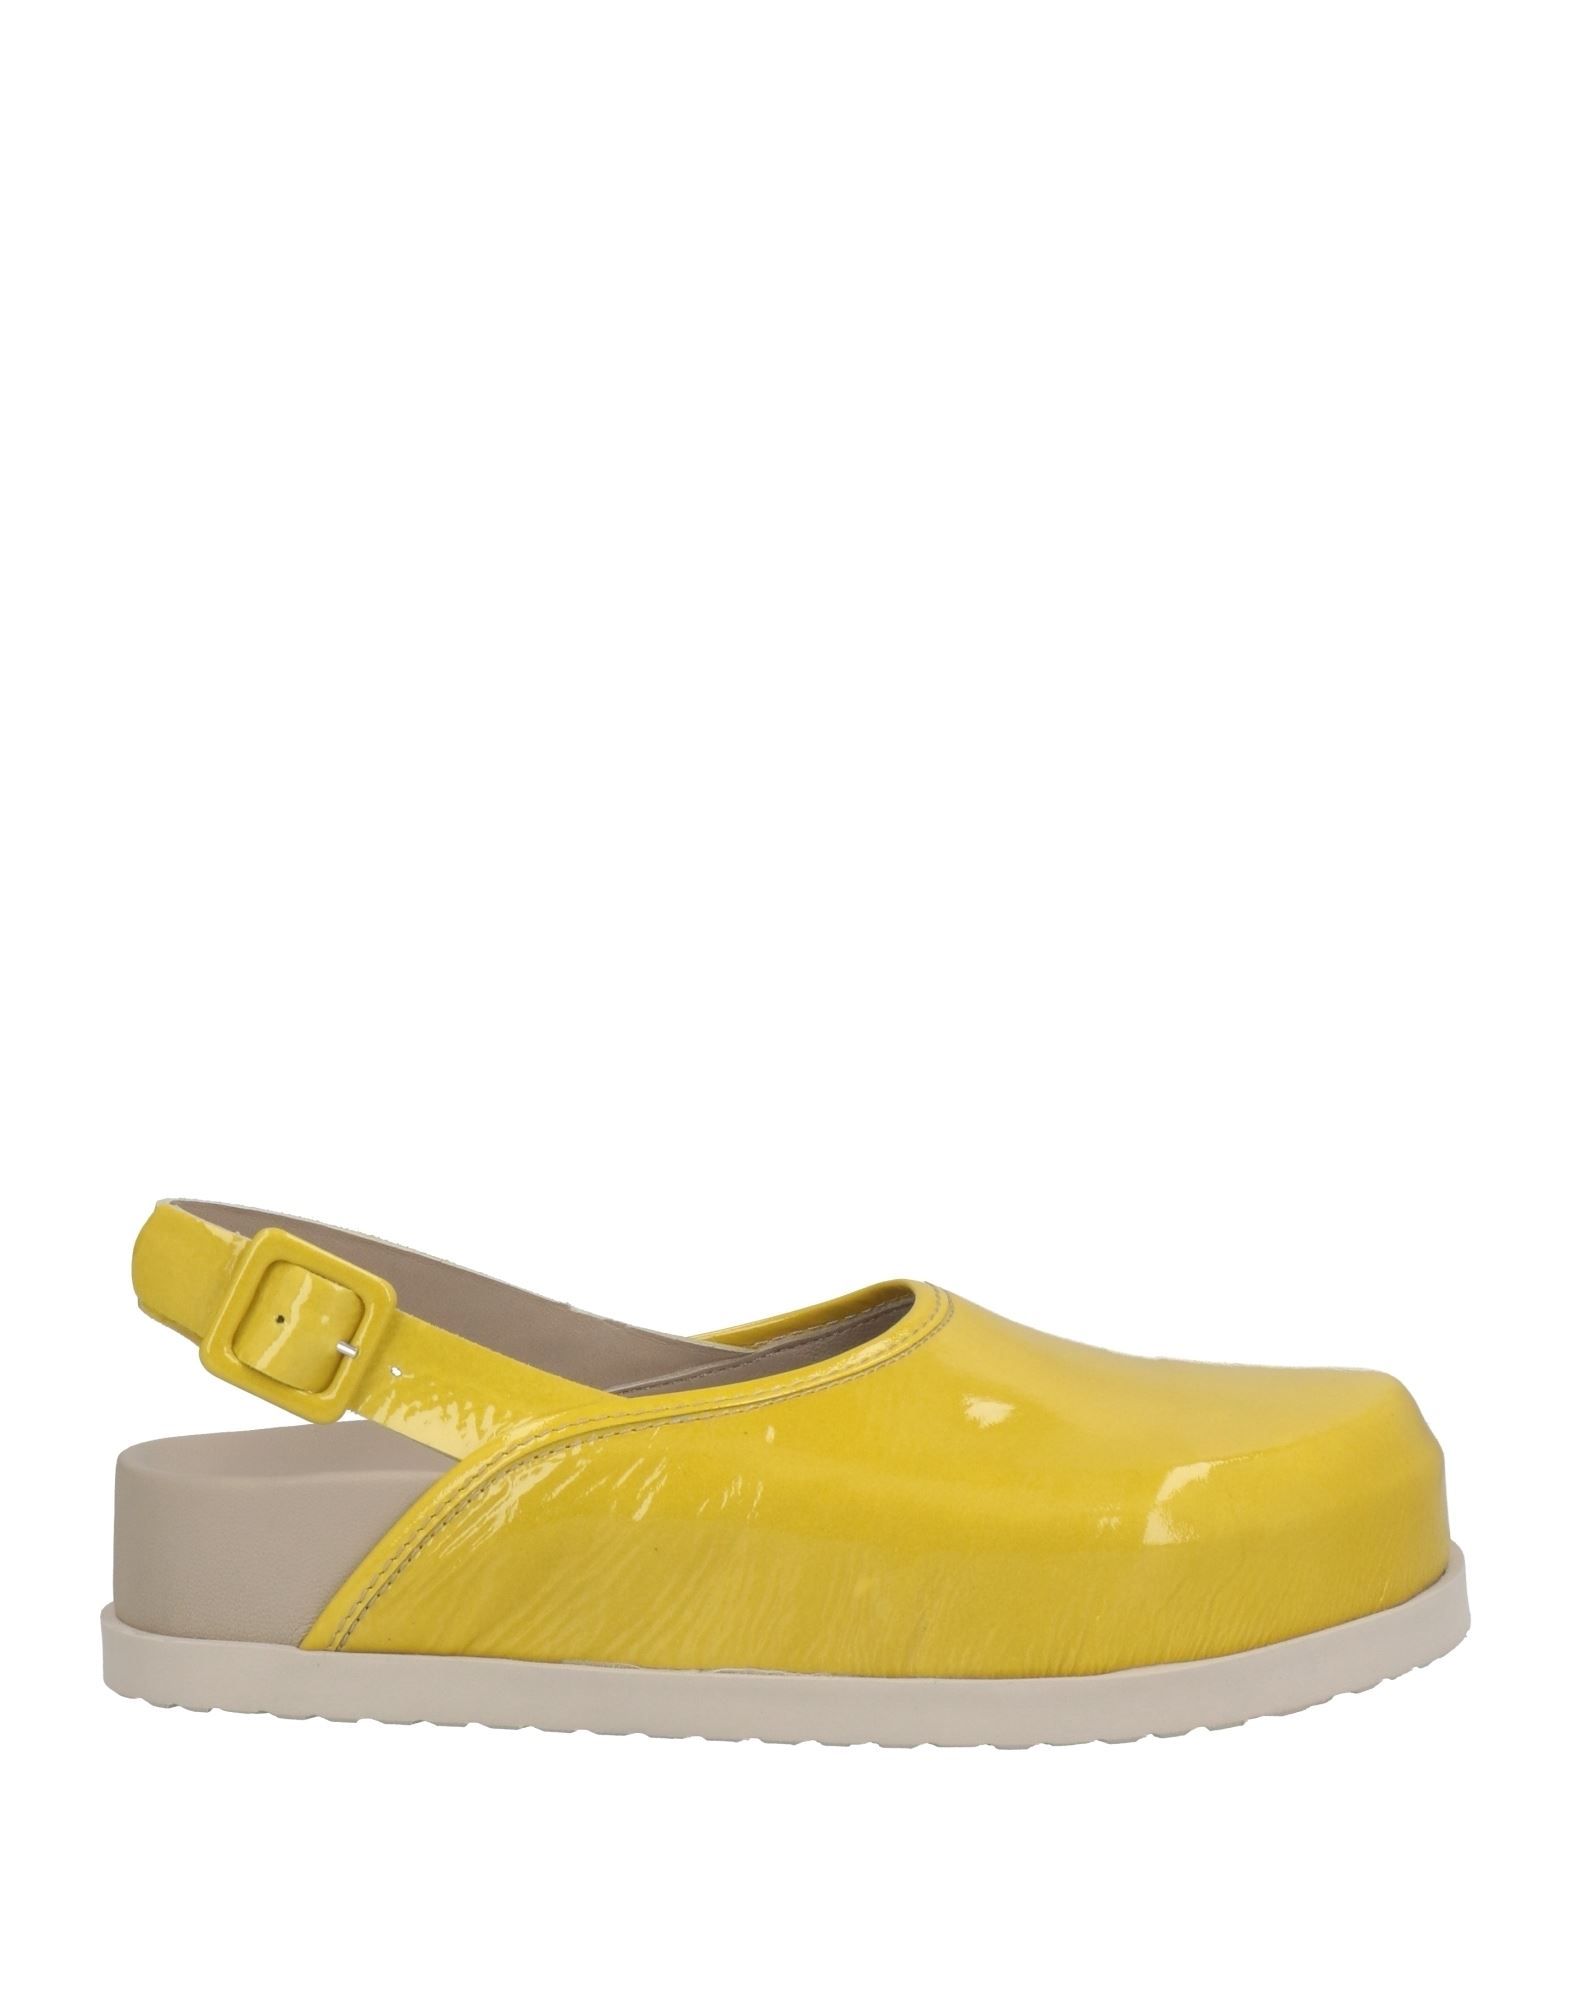 Patrizia Bonfanti Woman Mules & Clogs Yellow Size 8 Soft Leather